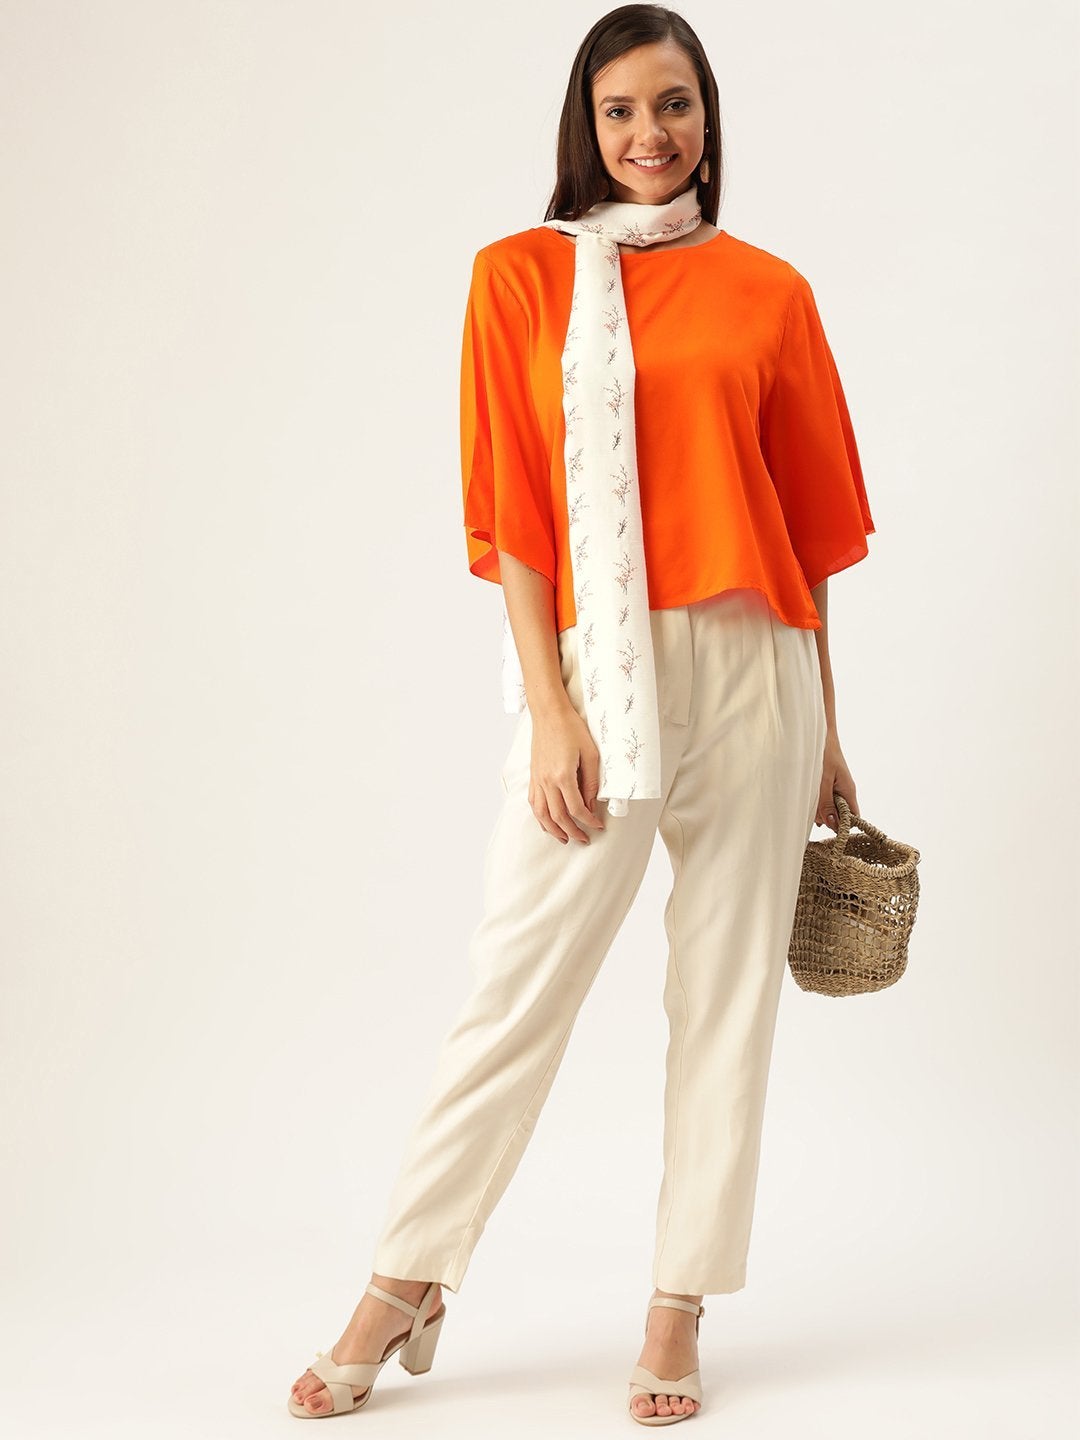 Women's Orange Top With  White Stole - InWeave